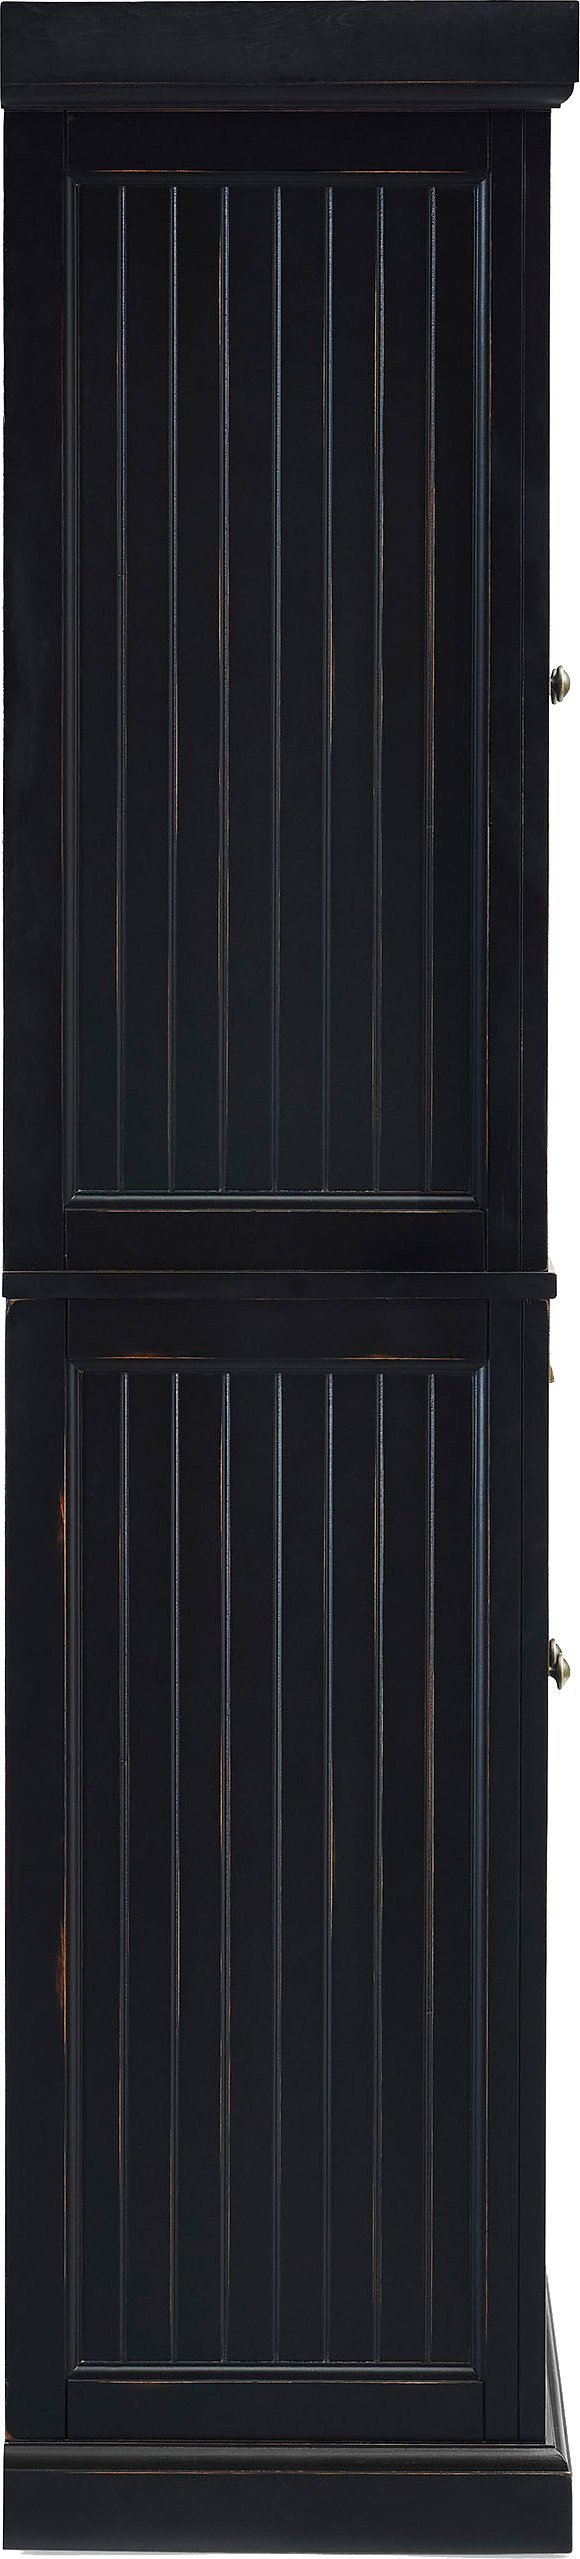 Storage crosley furniture seaside kitchen pantry cabinet distressed black